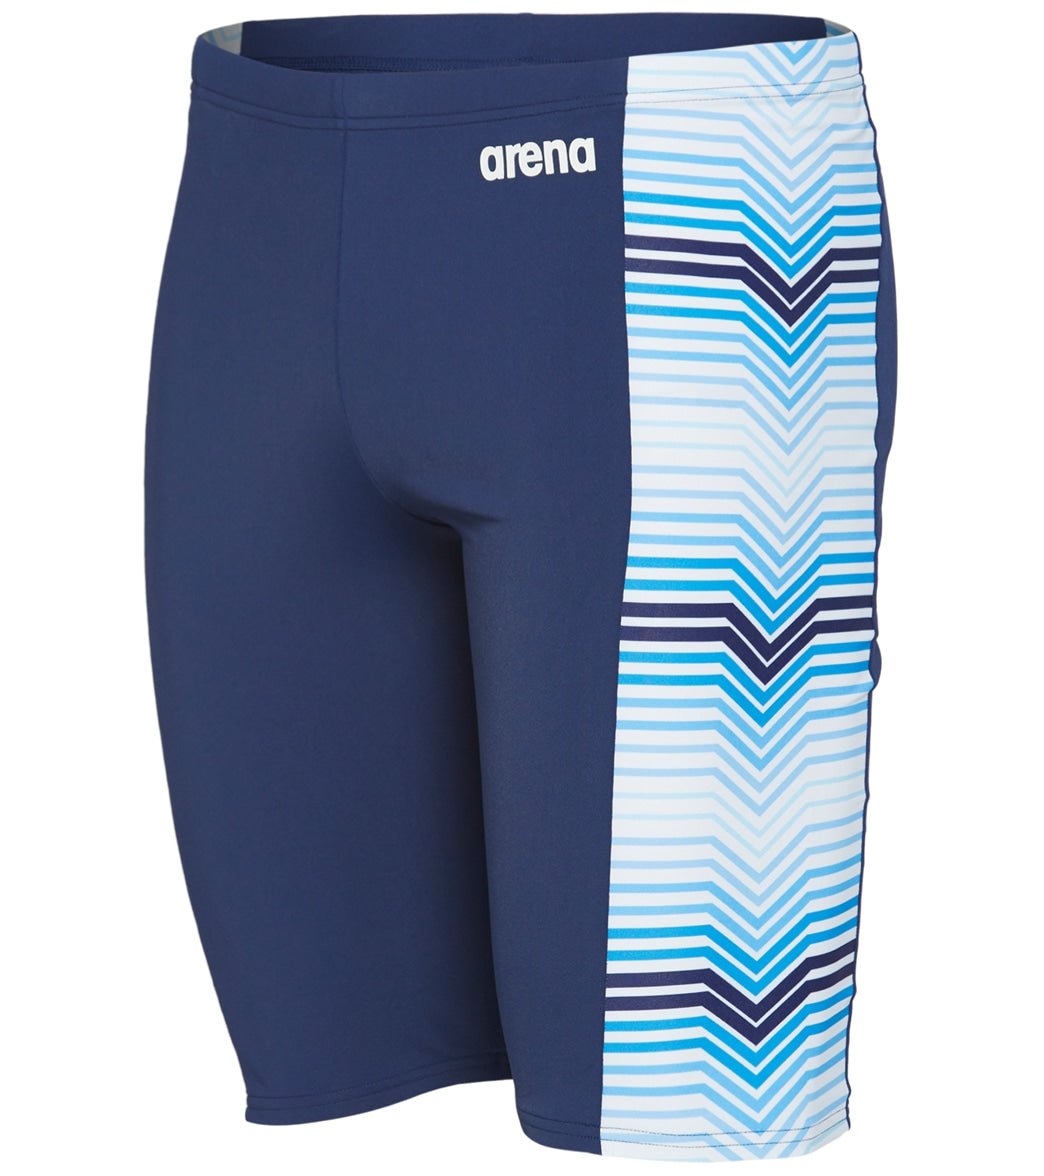 Arena Men's Multicolor Stripes Maxlife Jammer Swimsuit - Navy/Royal/Multi 20 - Swimoutlet.com